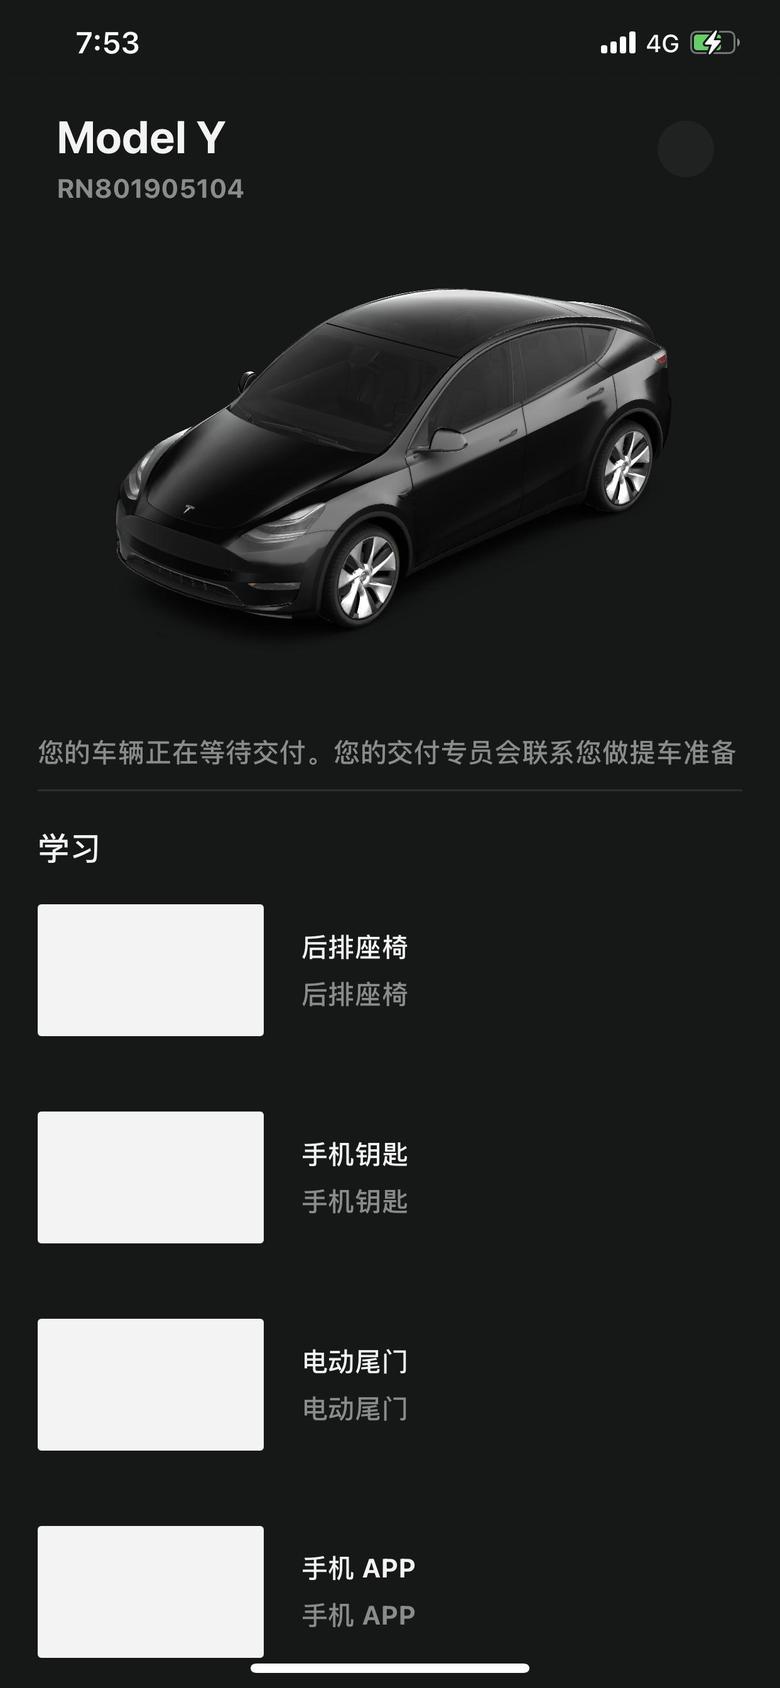 model y 广州目前有提车的麻烦回复一下，提到几号了